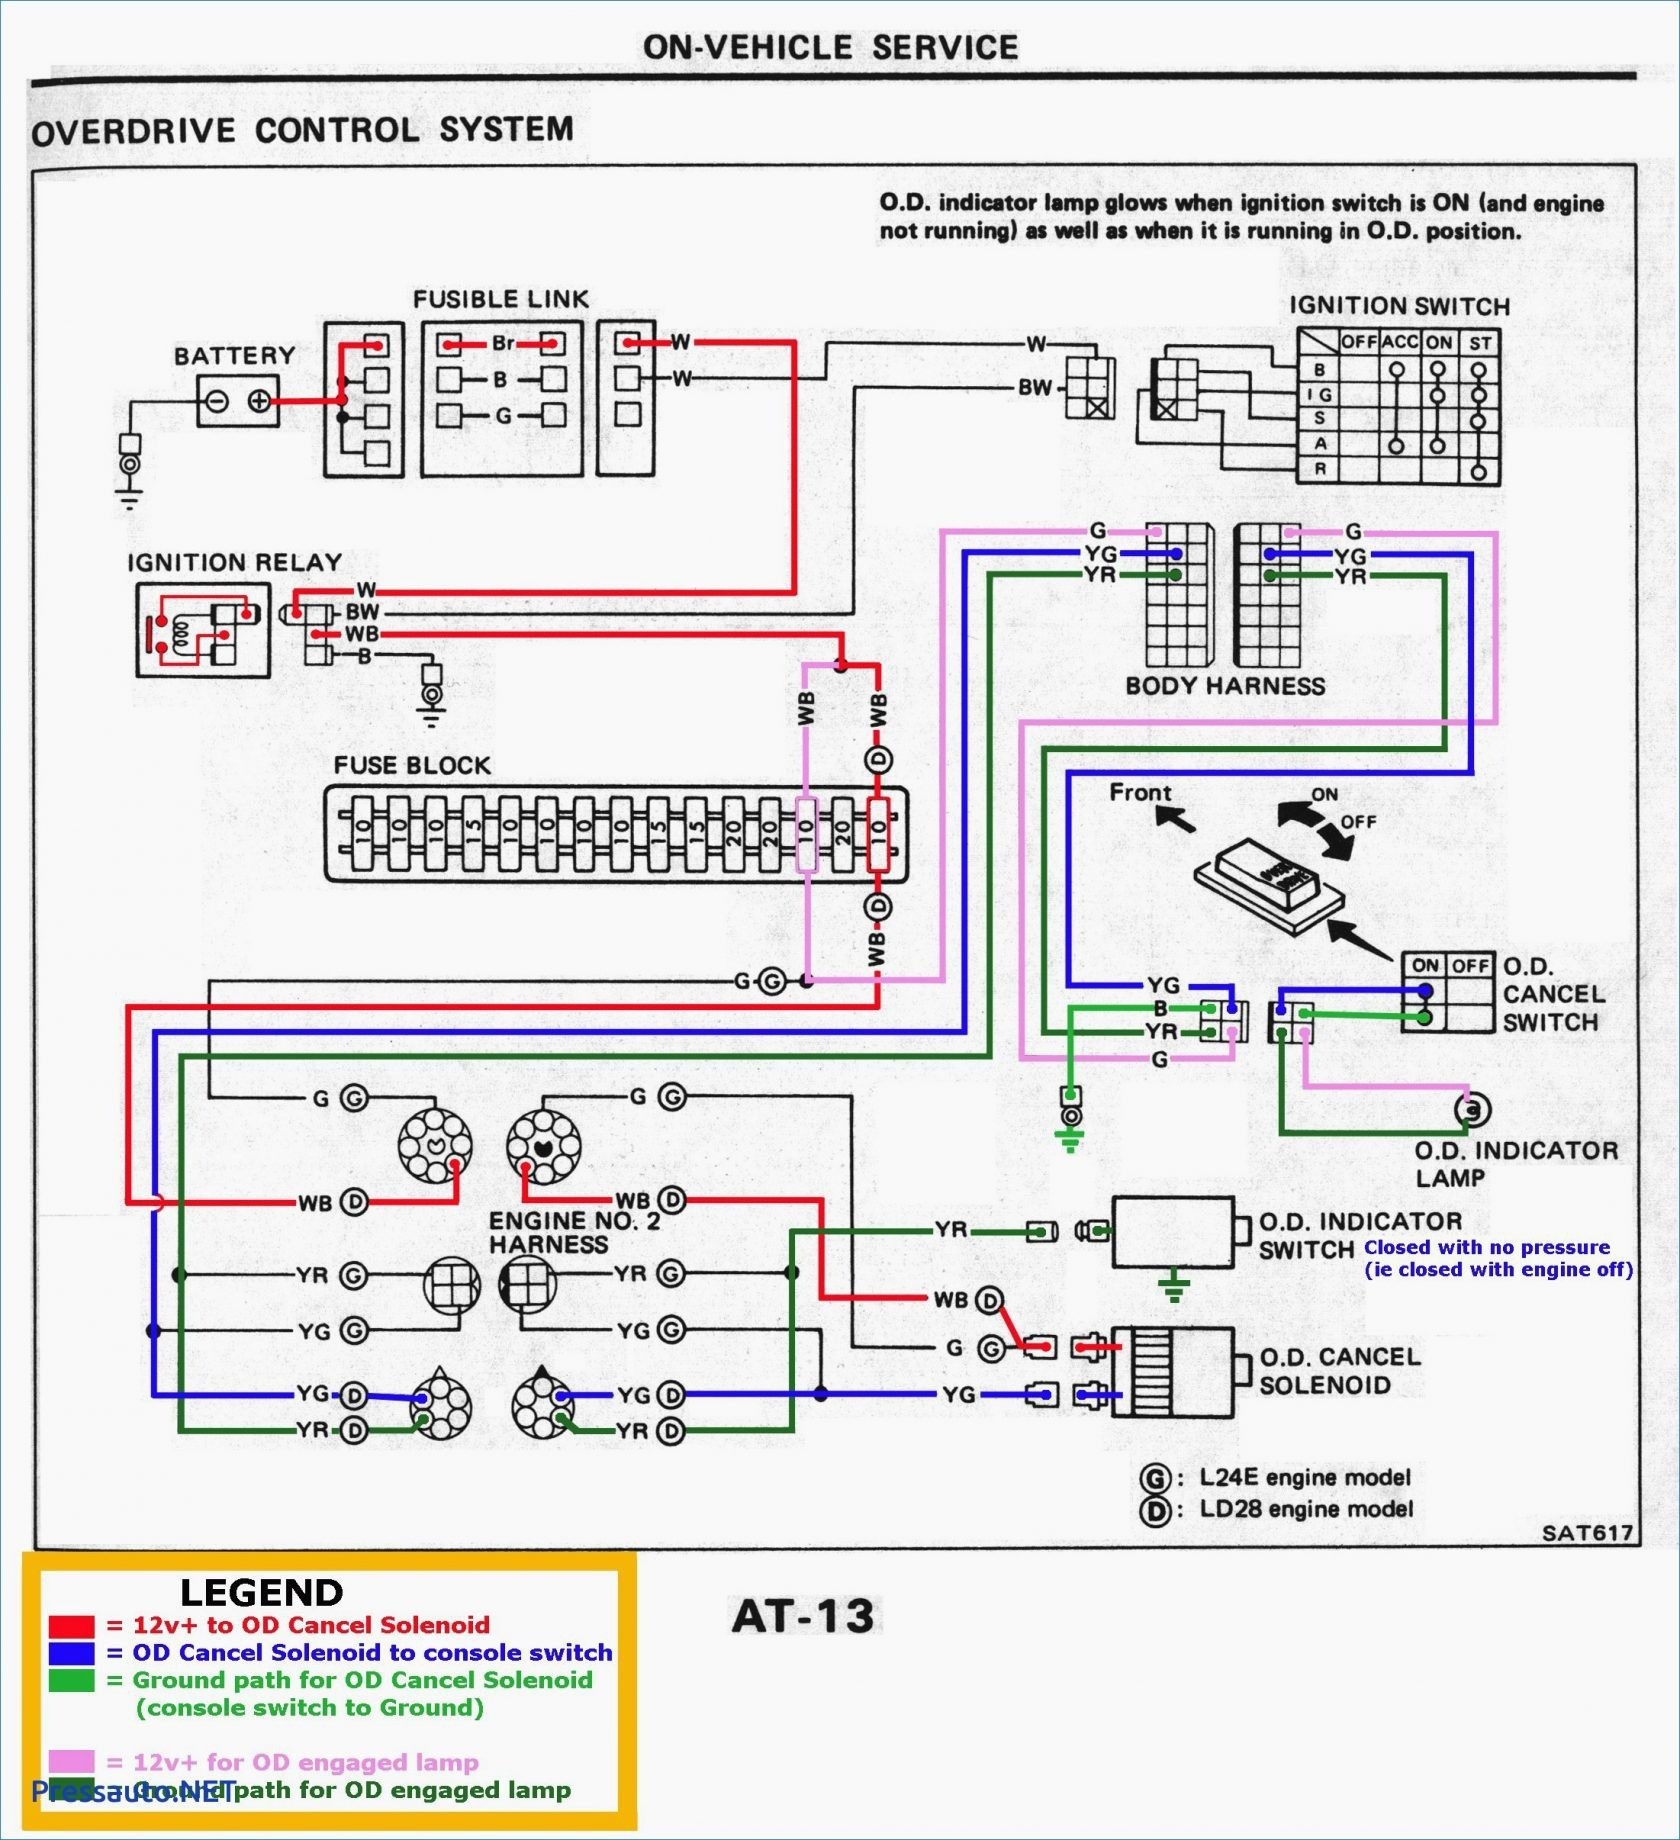 Wiring Diagram for Push button Start Inspirationa Ignition Relay Wiring Diagram Fresh Starter solenoid Wiring Diagram